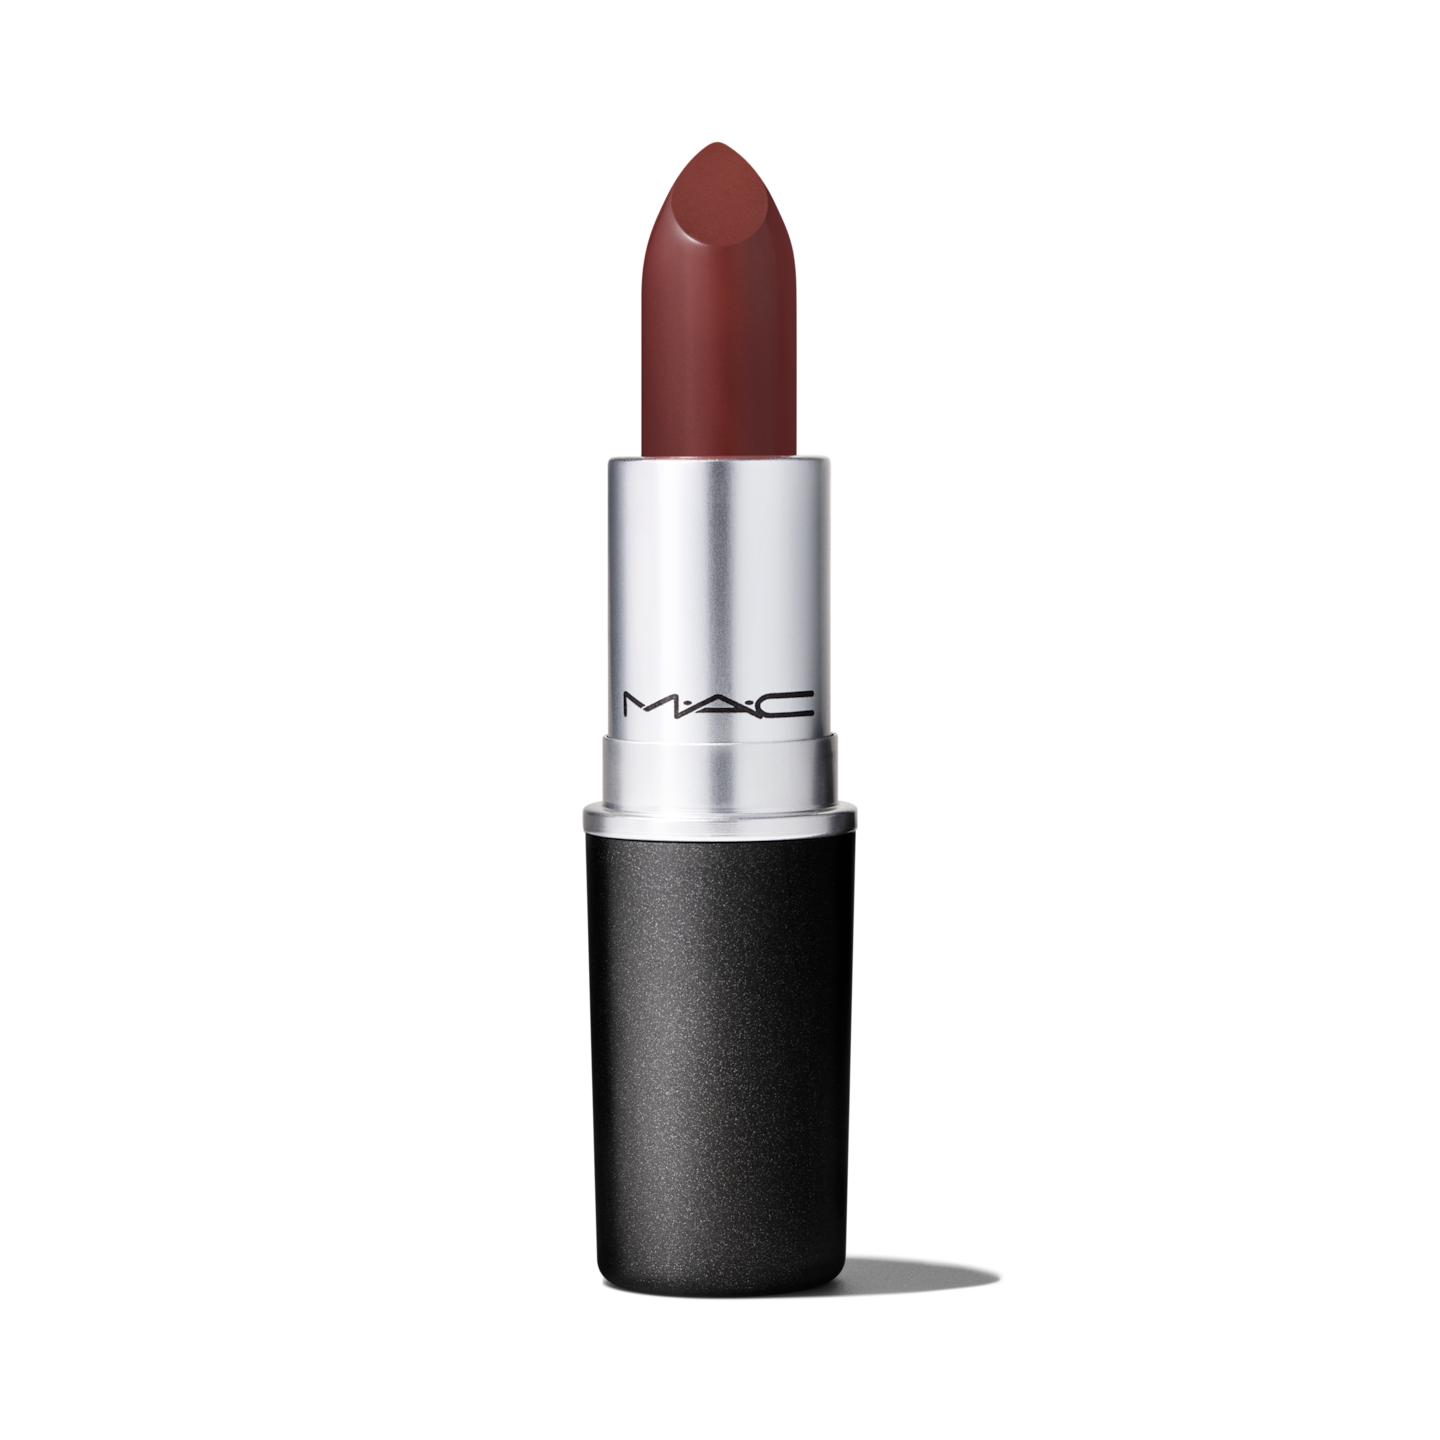 Spektakel steekpenningen spiegel MAC Matte Lipstick | Including Marrakesh, Velvet Teddy, Mehr & Taupe  Lipsticks | MAC Cosmetics - Official Site